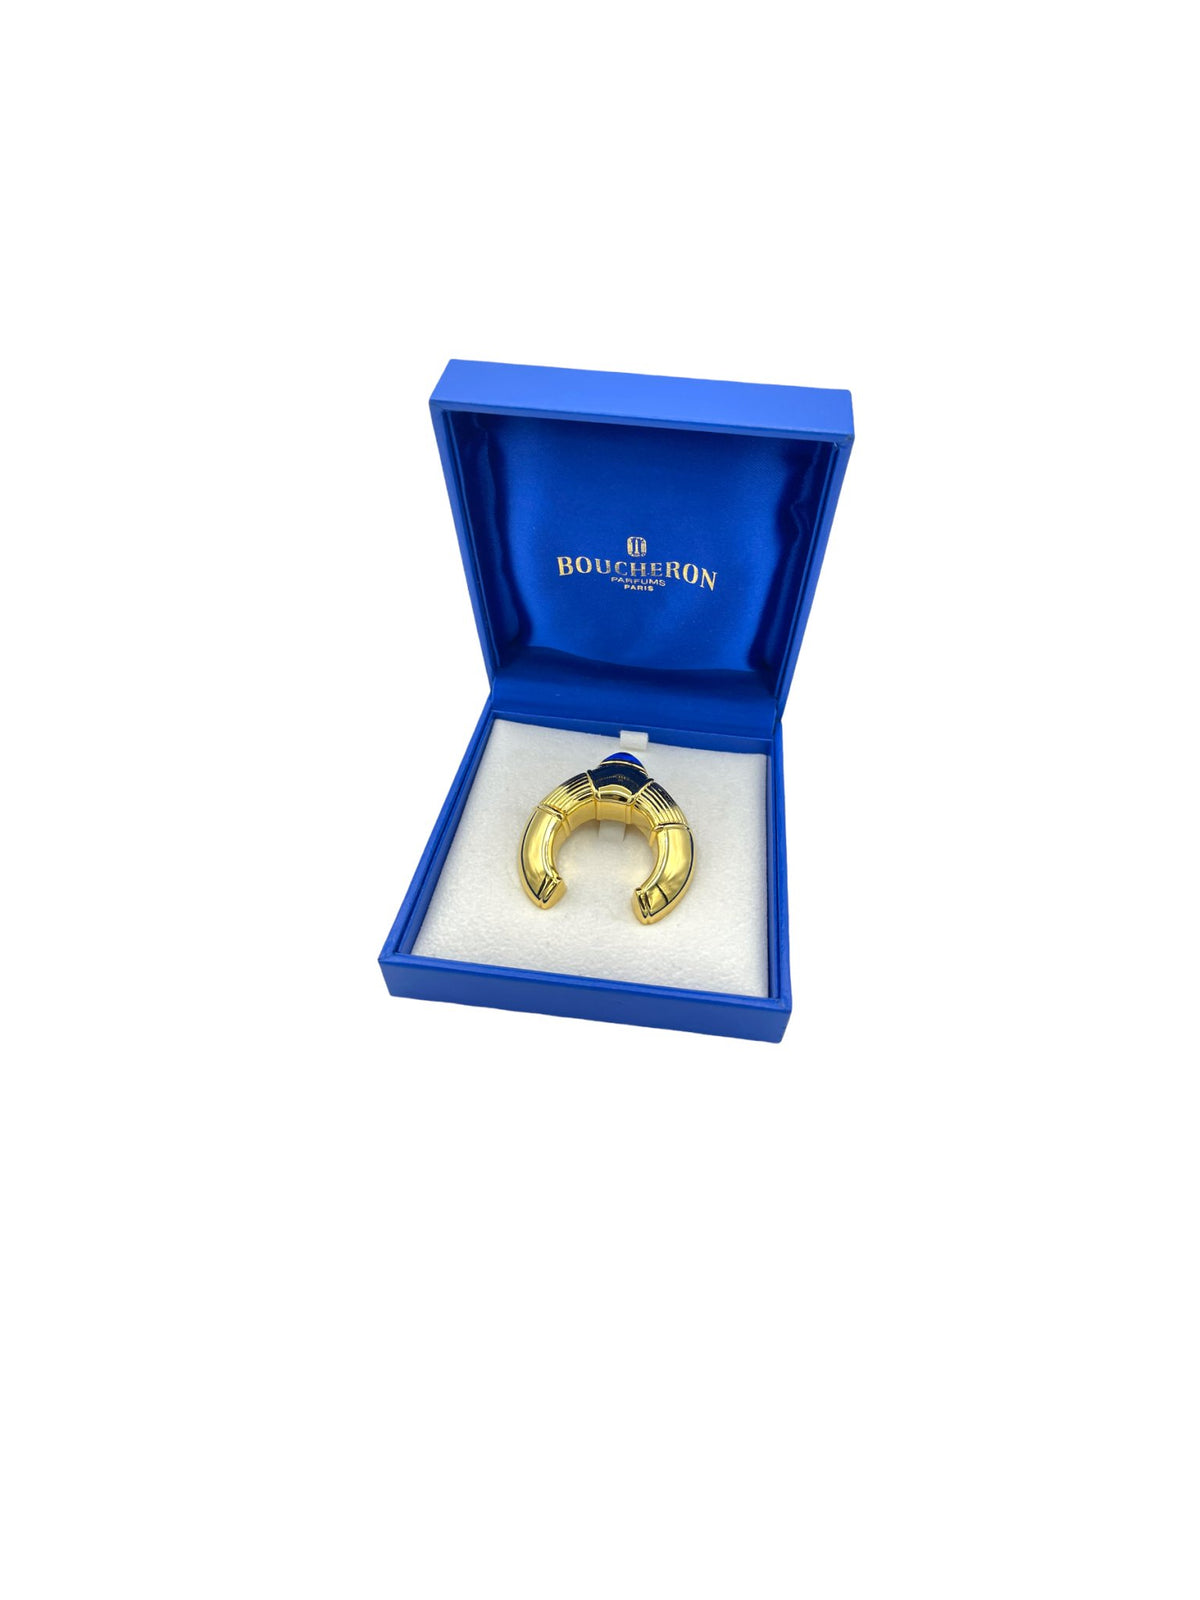 Boucheron Parfums Paris Gold Purfume Bottle Vintage Brooch - 24 Wishes Vintage Jewelry